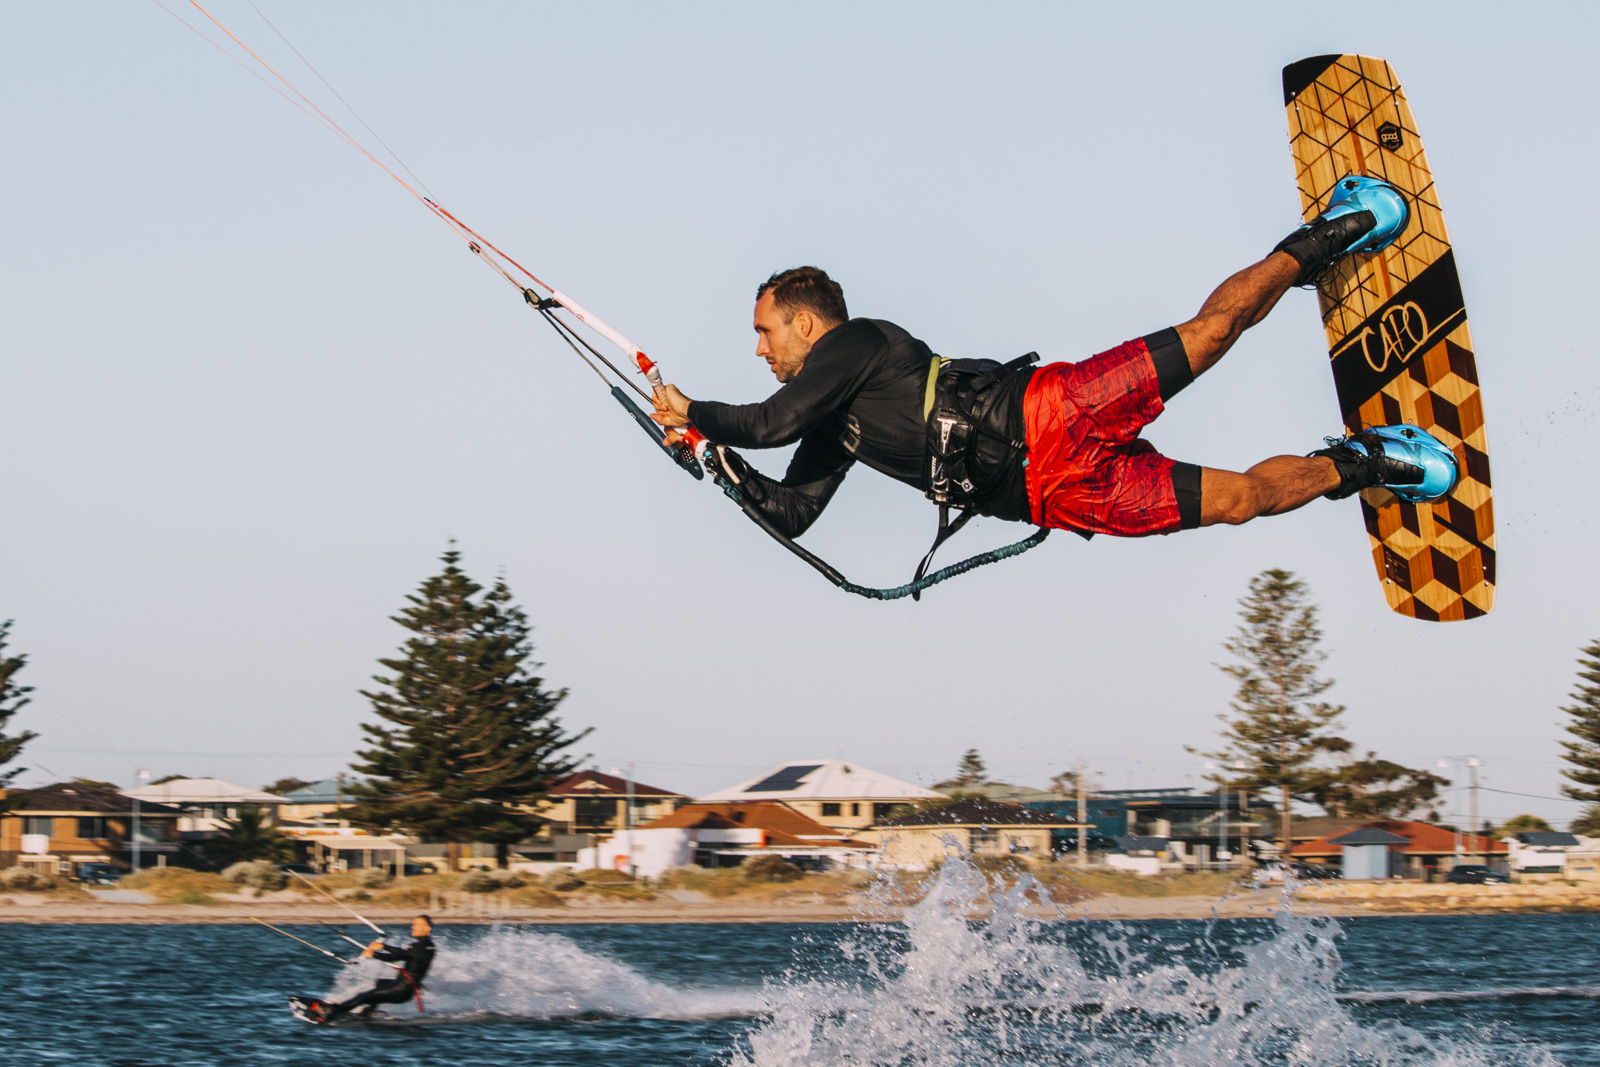 Kite Surfer trick